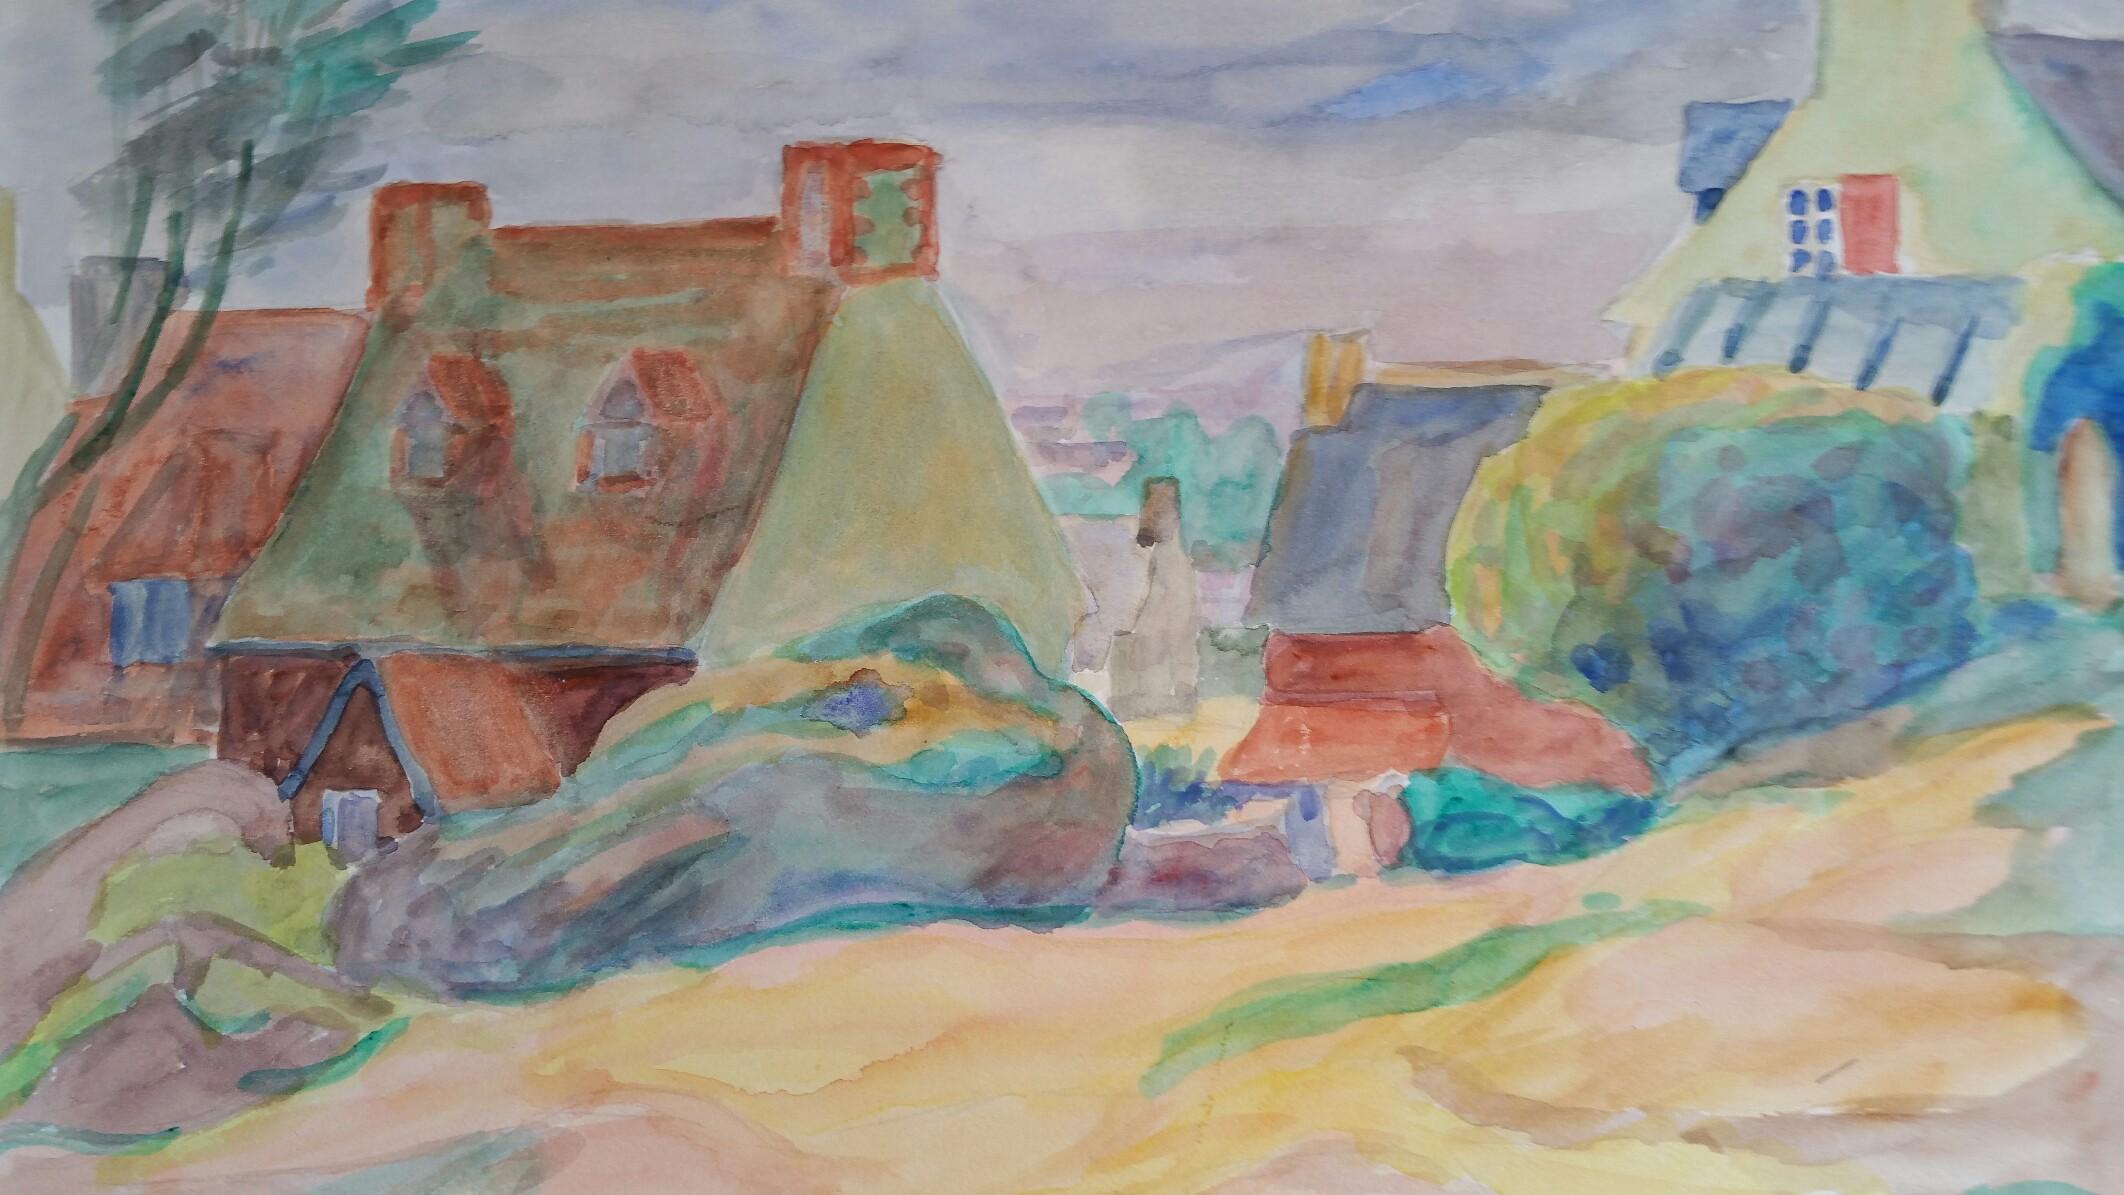 Louis Bellon Landscape Art – Postimpressionistisches Gemälde der 1940er Jahre, Provence, Dorflandschaft